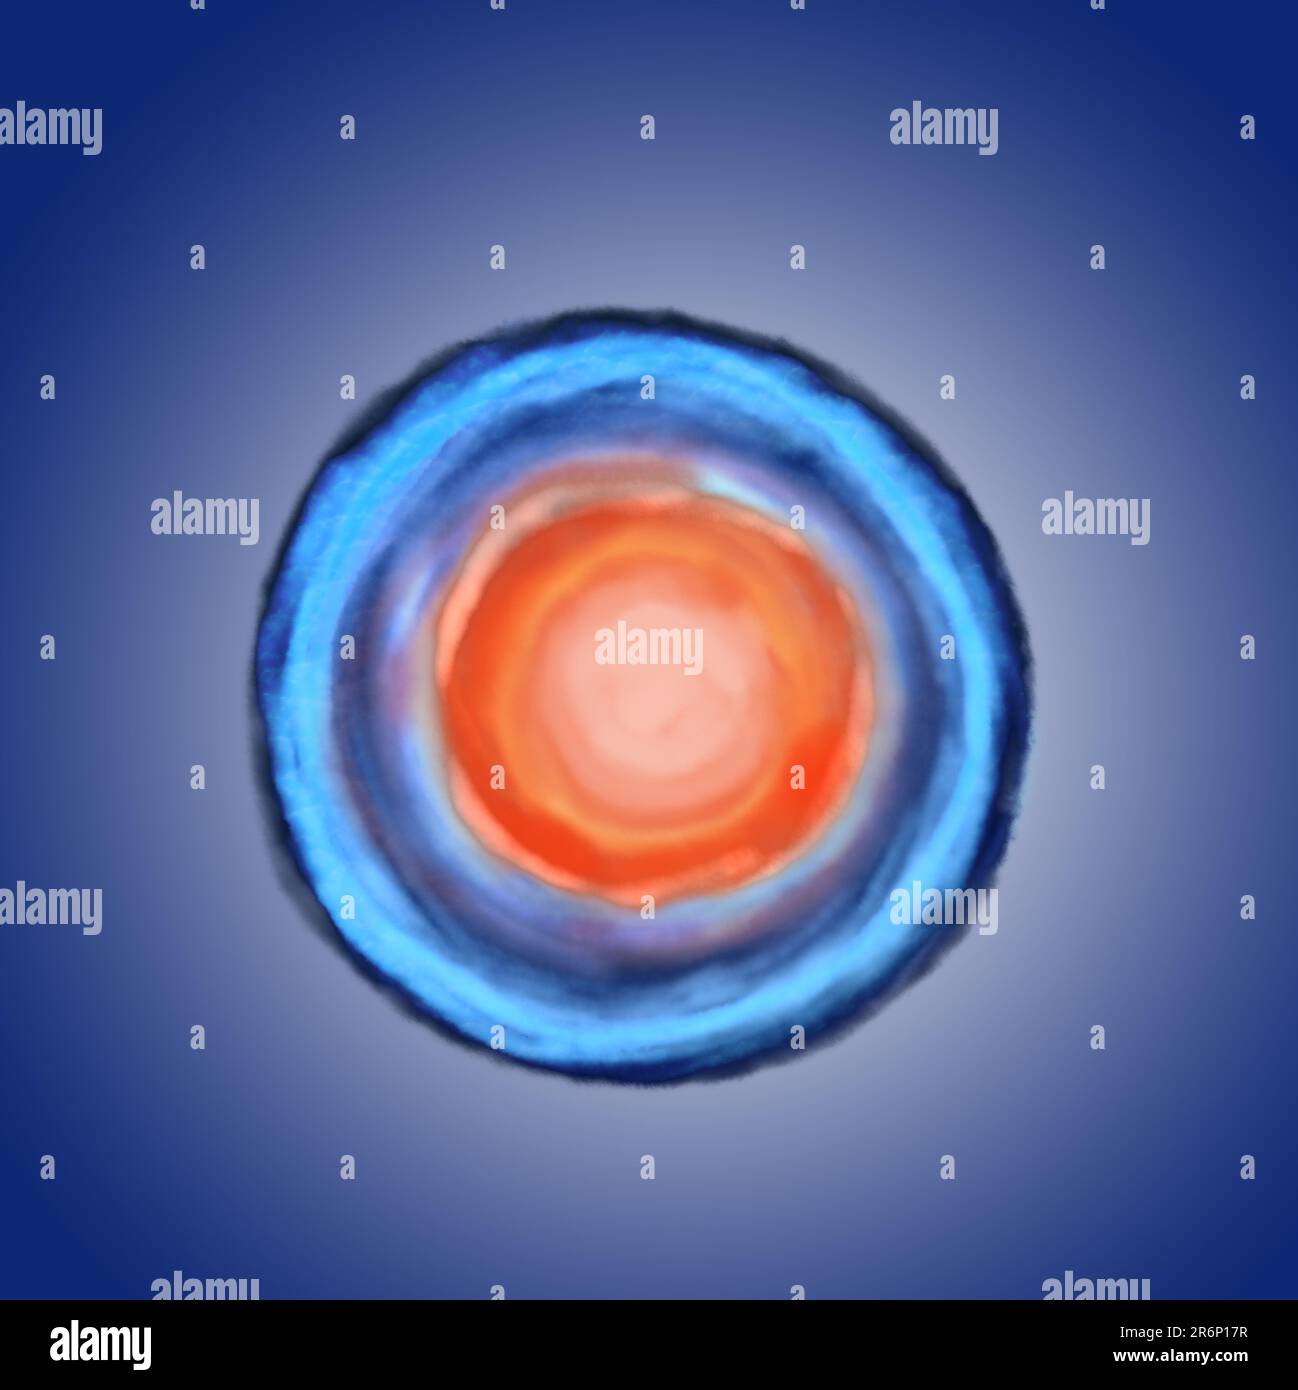 Ovum (egg cell) on blue background, illustration Stock Photo